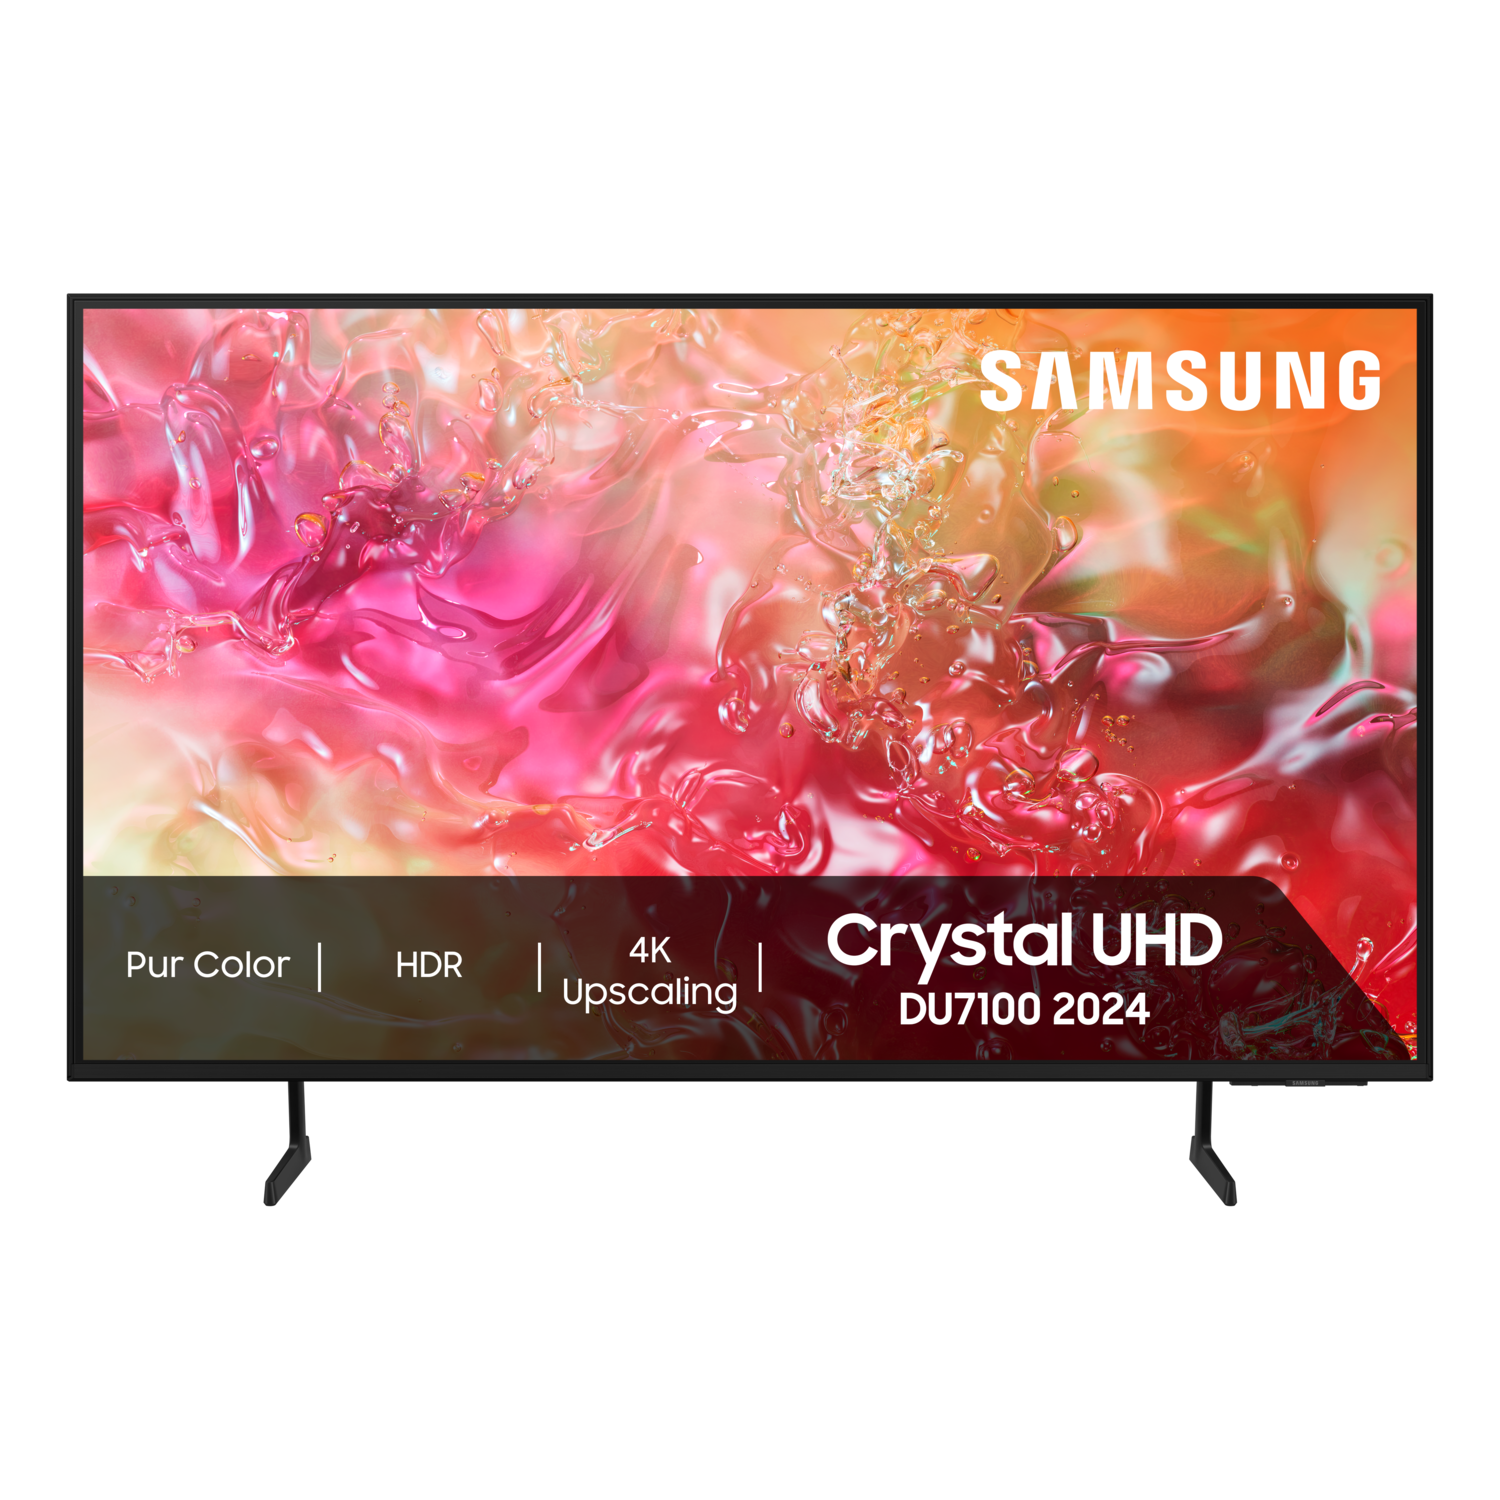 Samsung 55du7100 Crystal Uhd (2024)